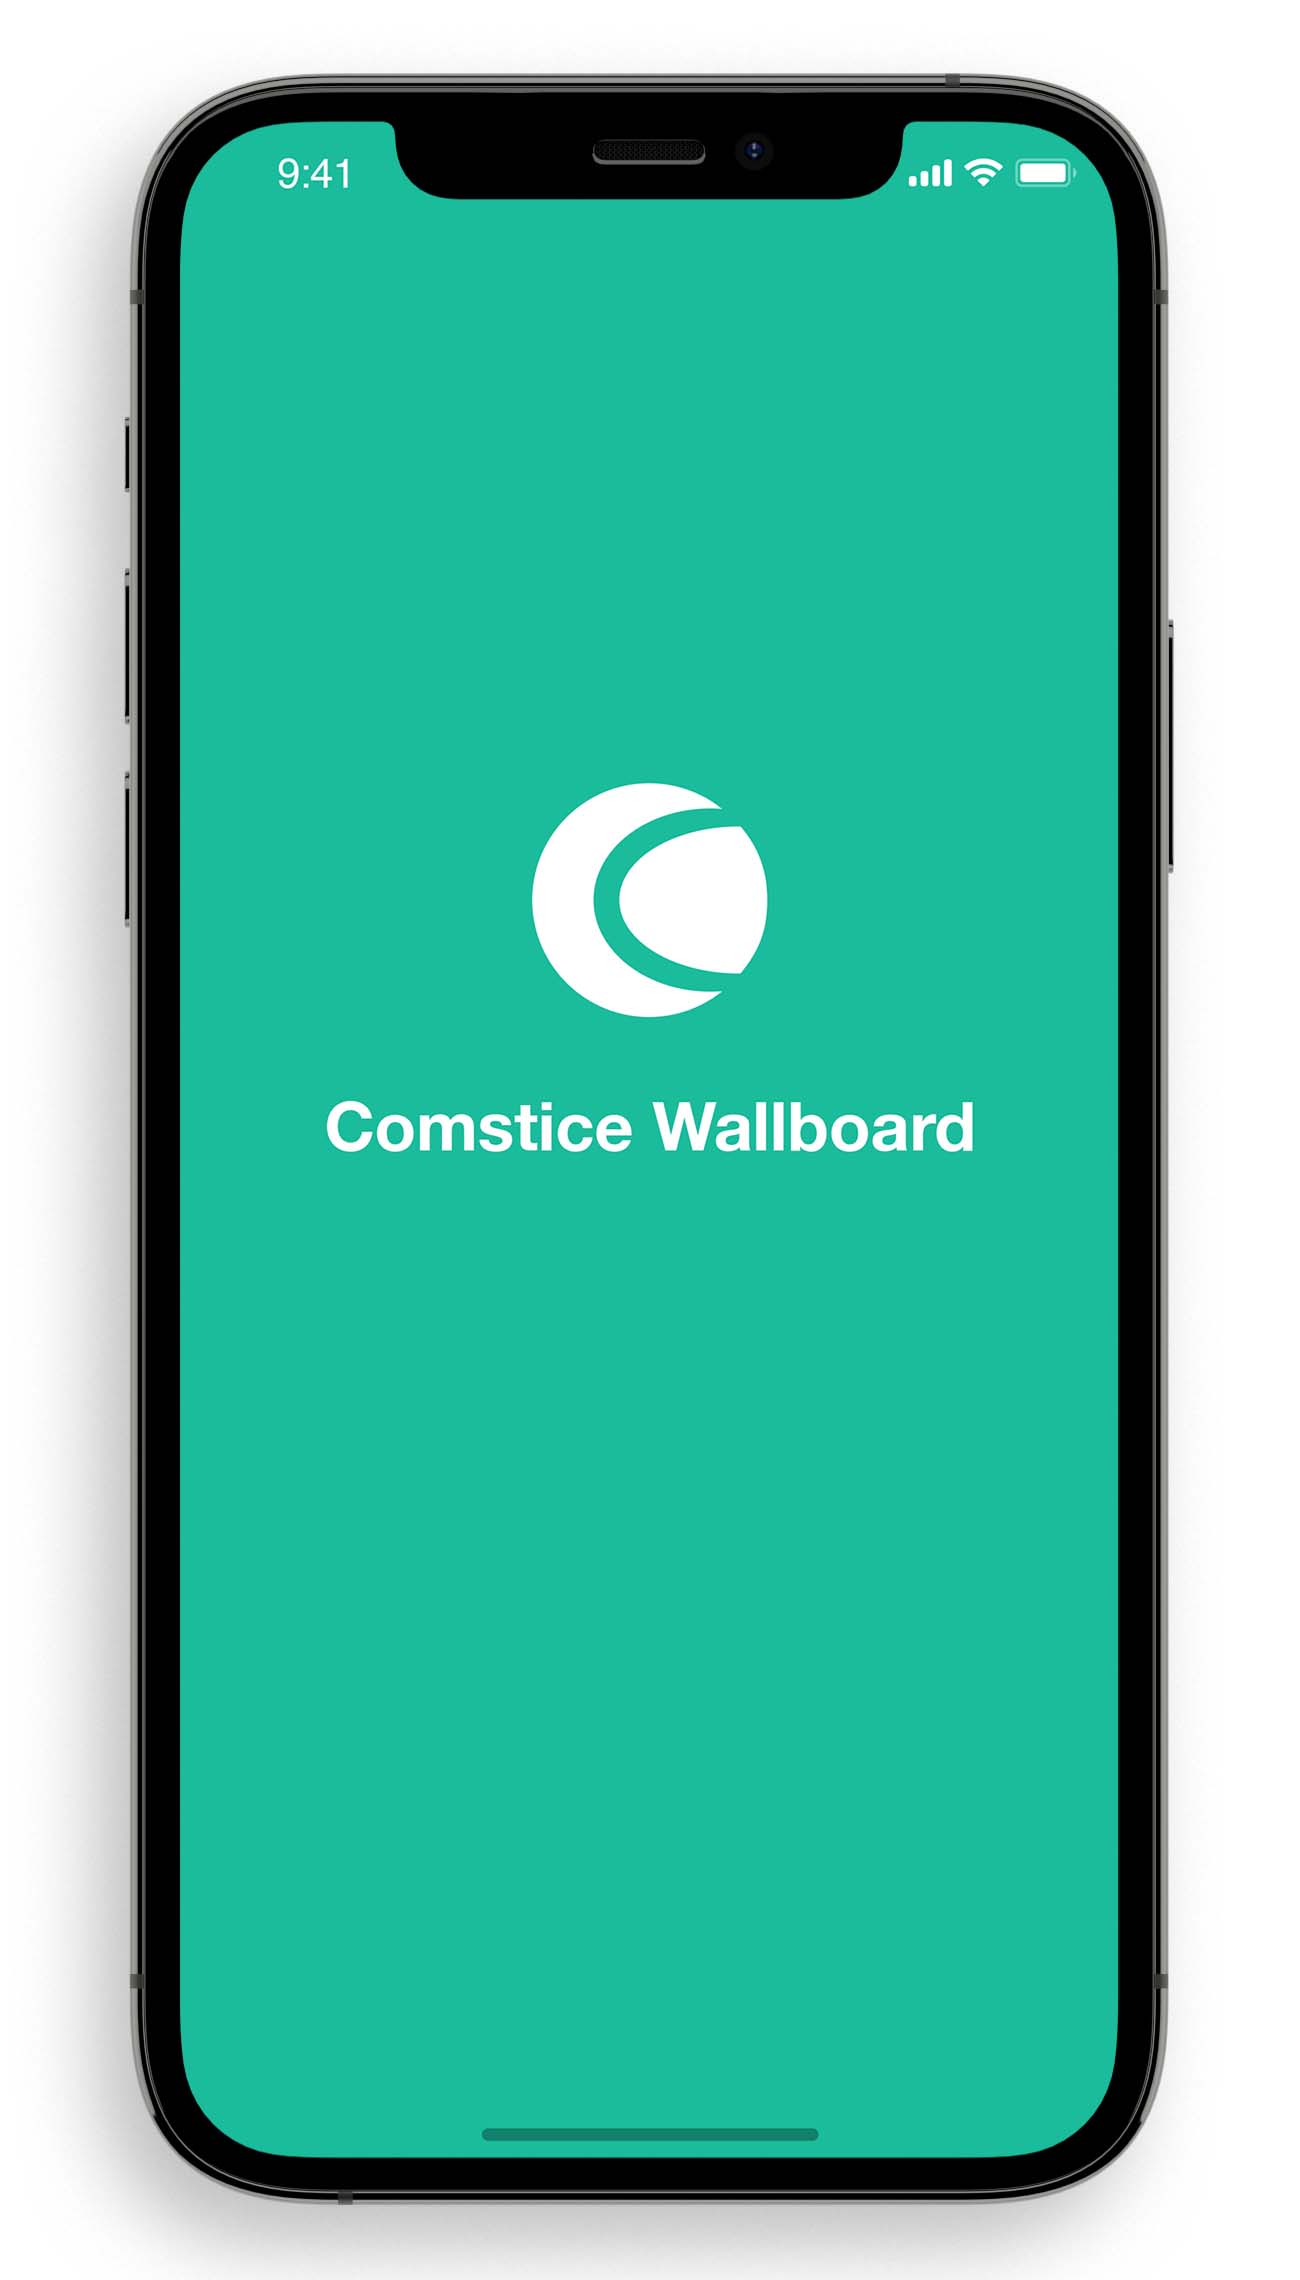 Amazon Connect Wallboard Mobile App